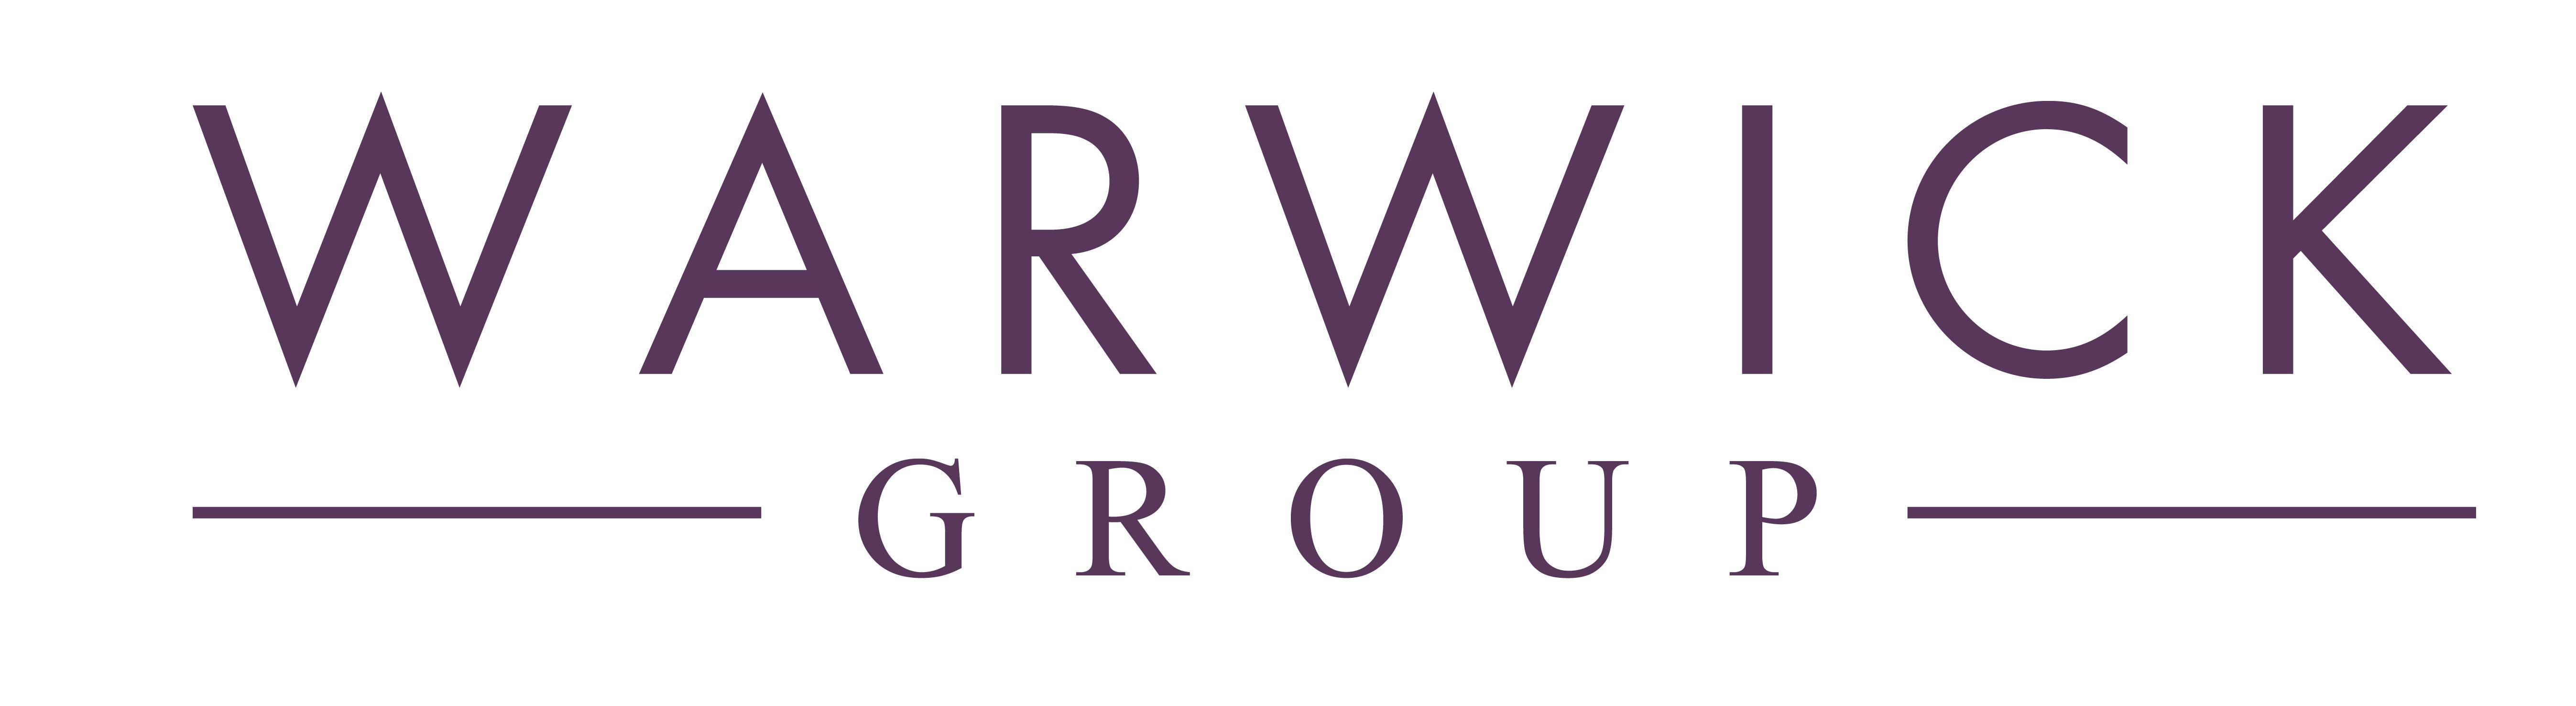 Warwick Logo - Warwick Group Logo May